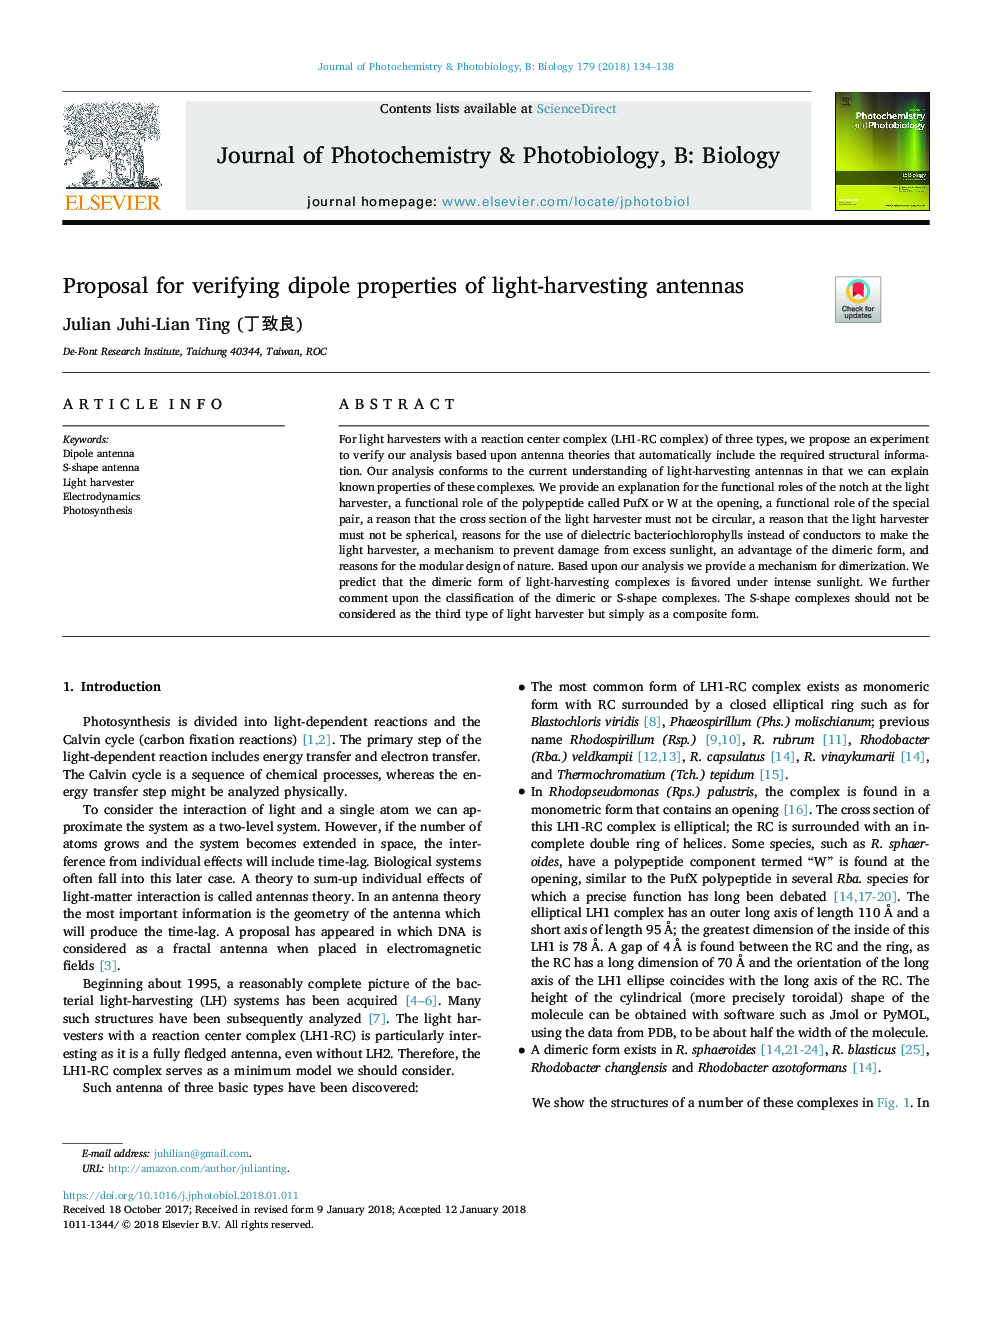 Proposal for verifying dipole properties of light-harvesting antennas